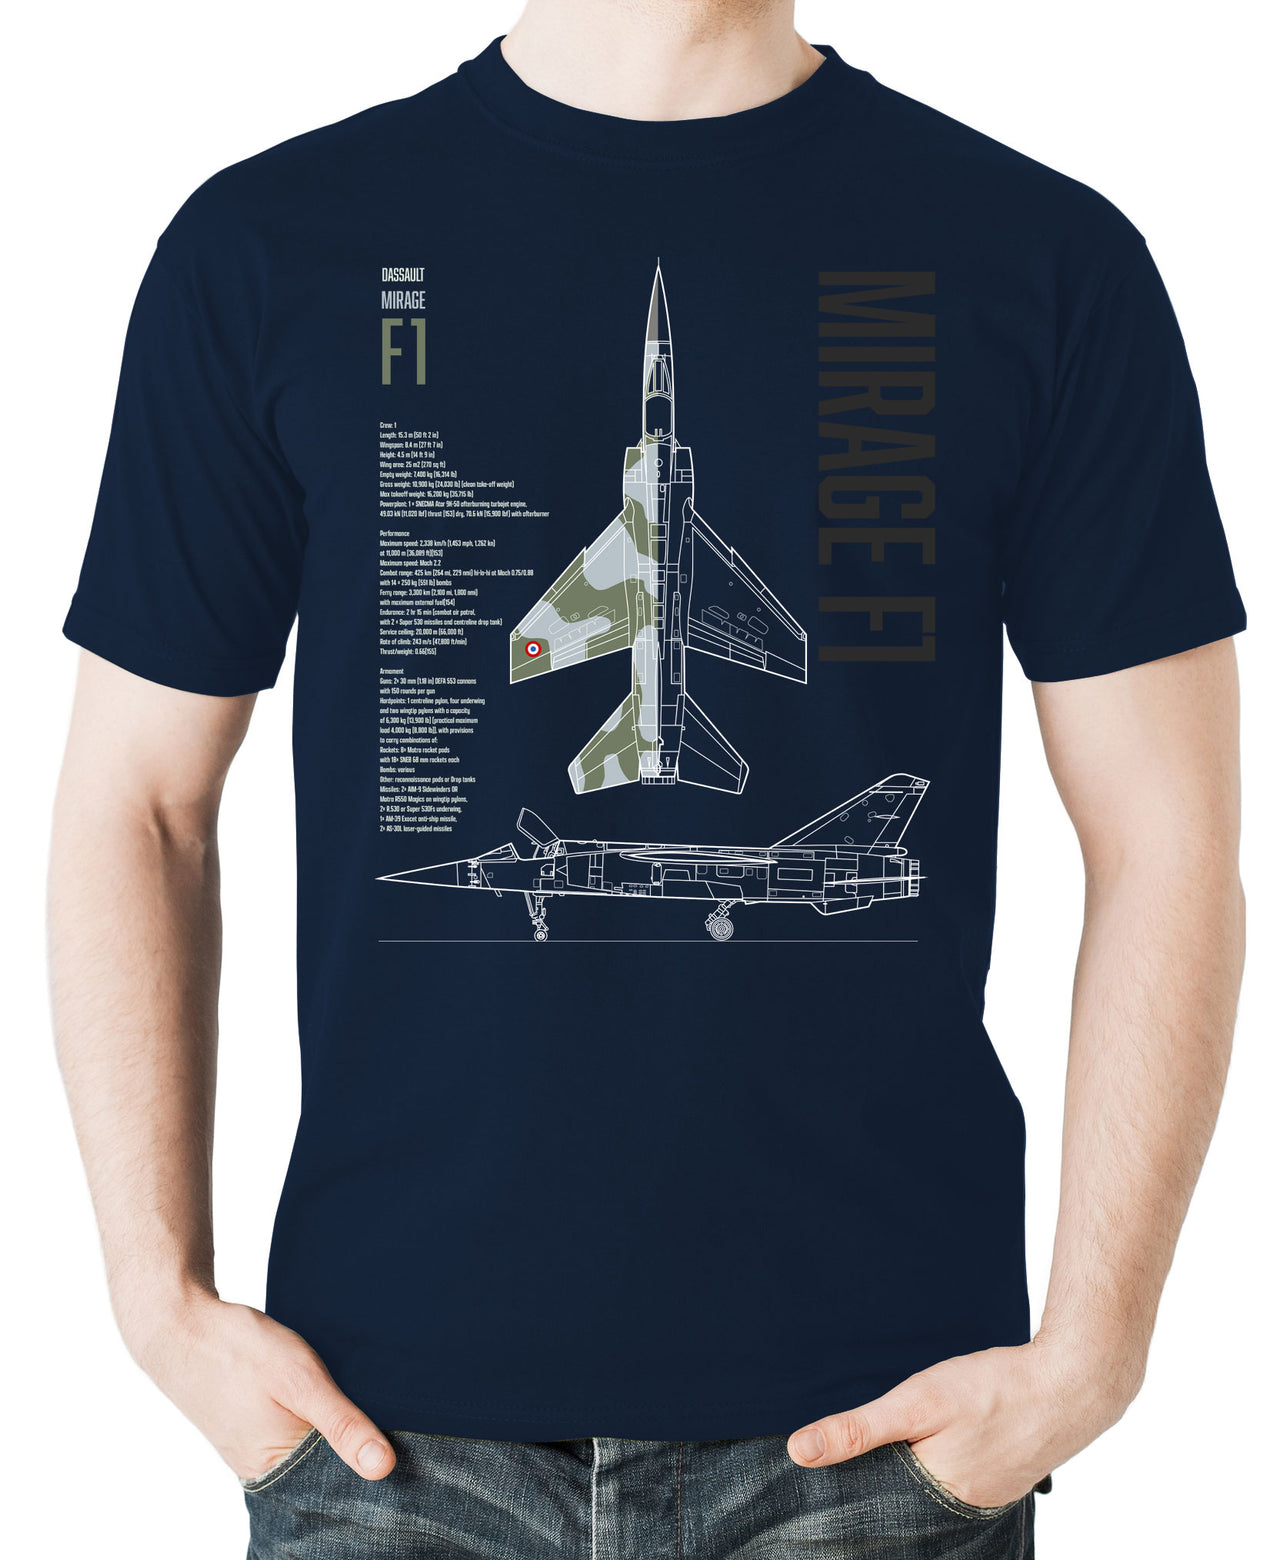 Mirage F1 - T-shirt